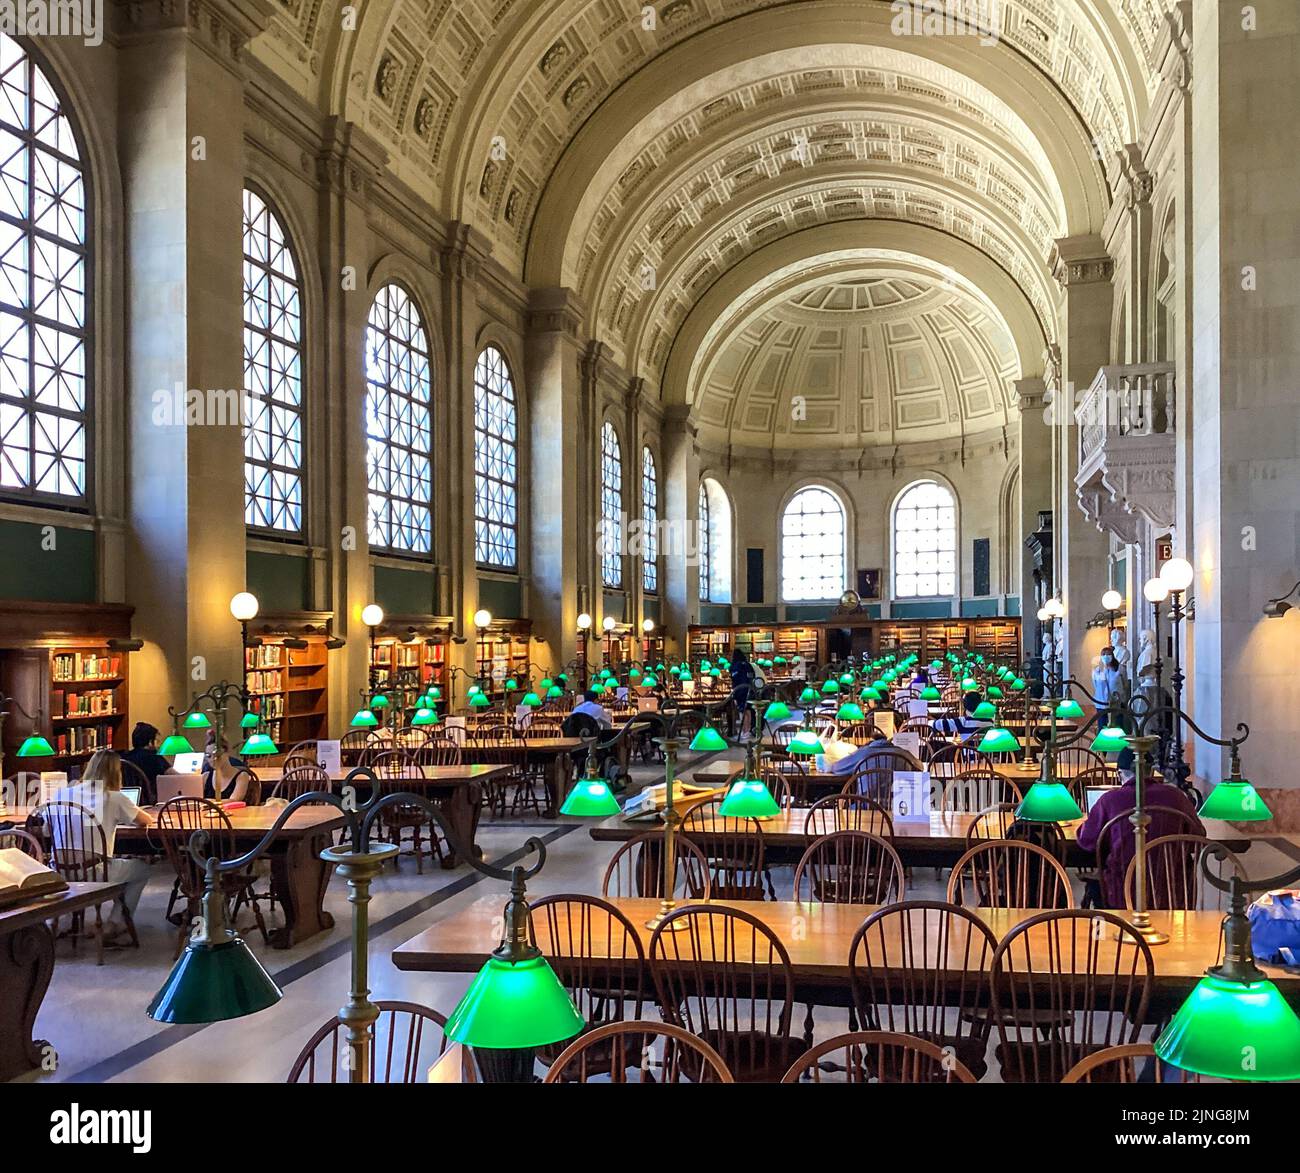 Illuminating Bates - Boston Public Library Fund